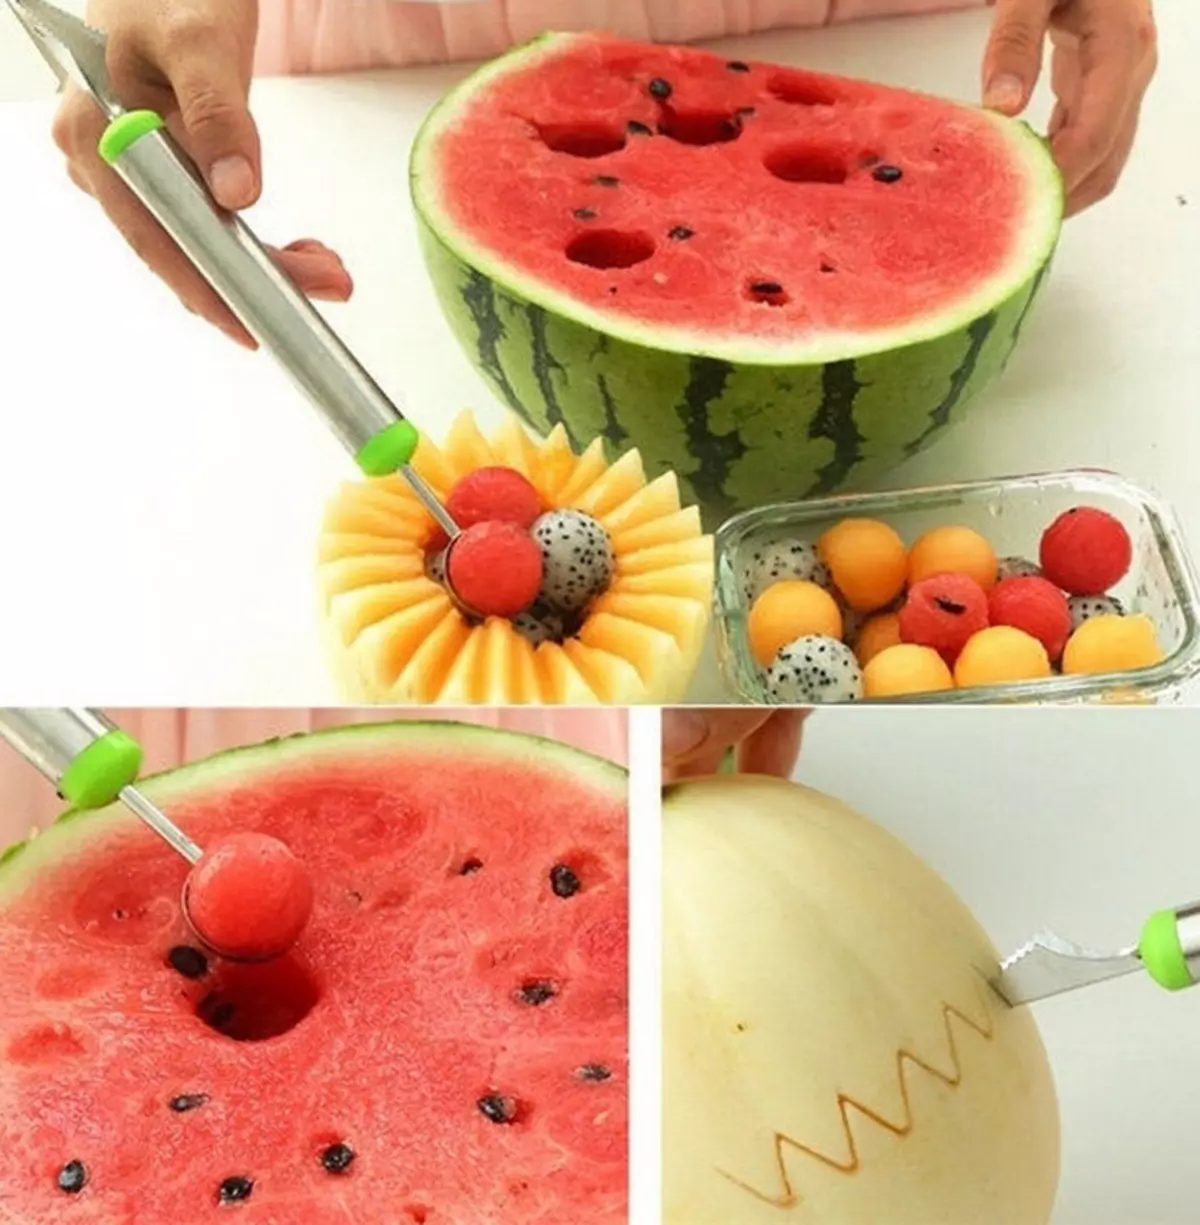 I-Spoon ye-melon kunye ne-watermelon